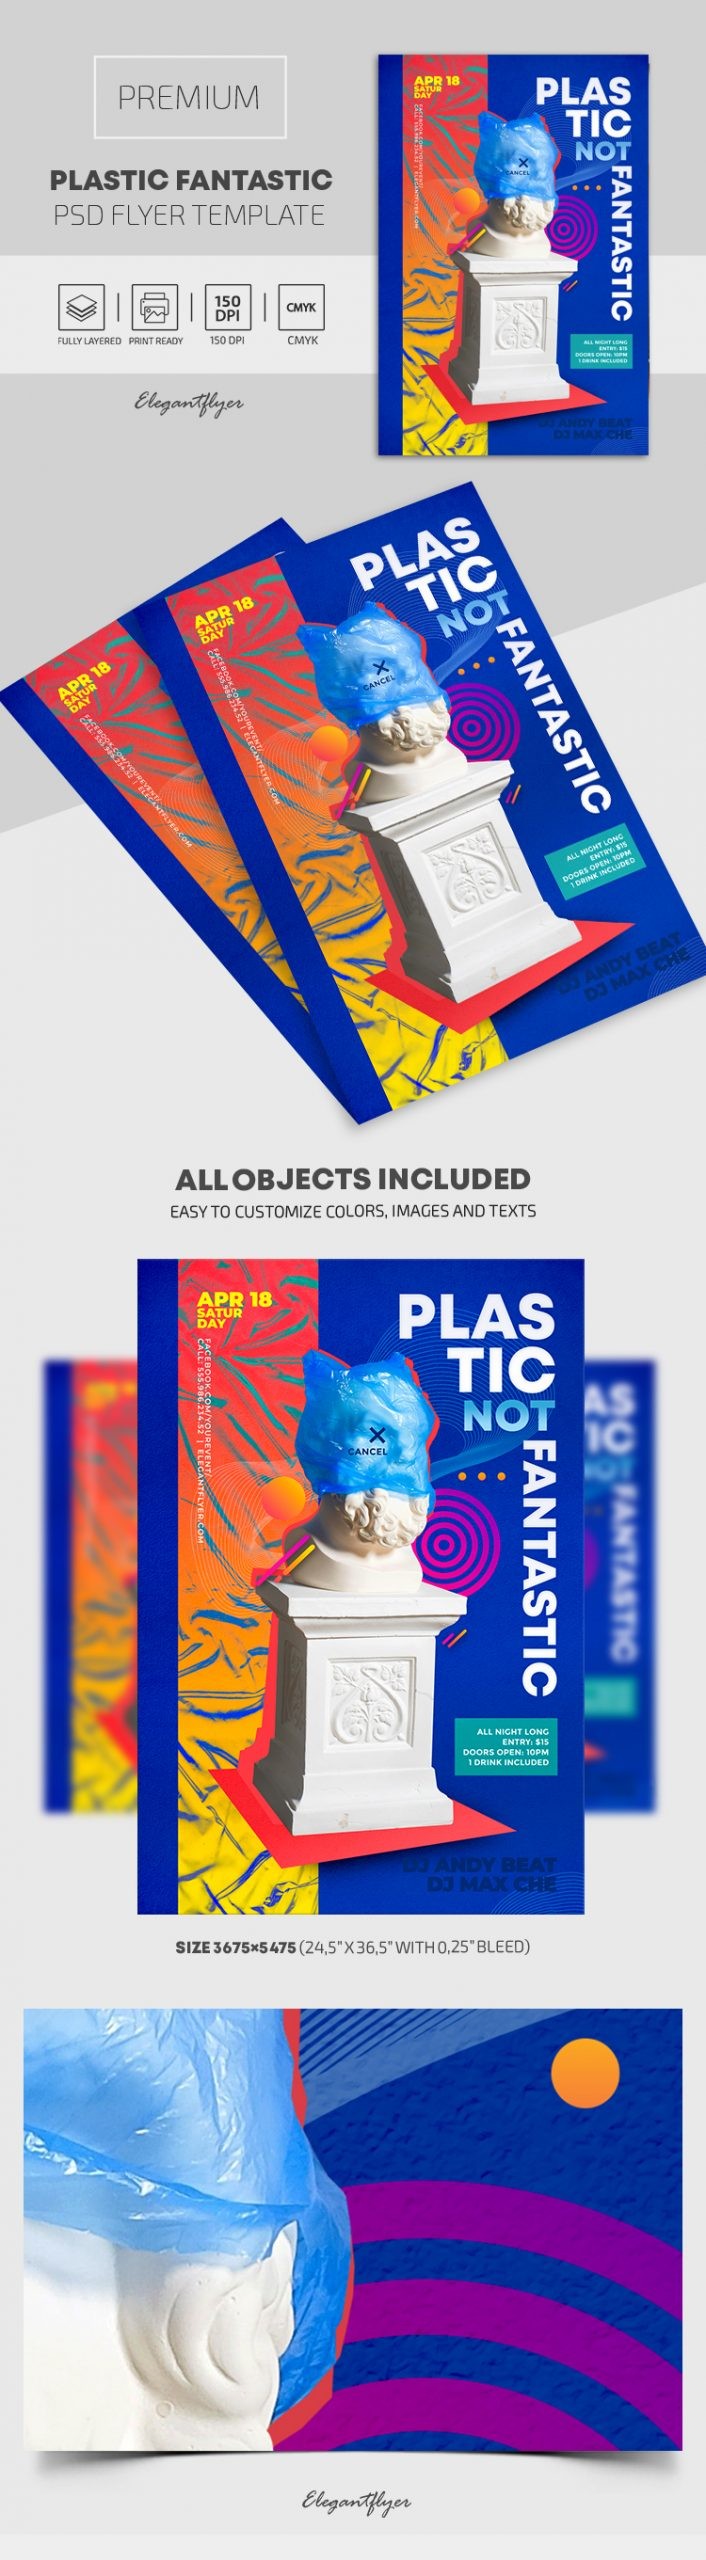 Plastic Fantastic Poster by ElegantFlyer